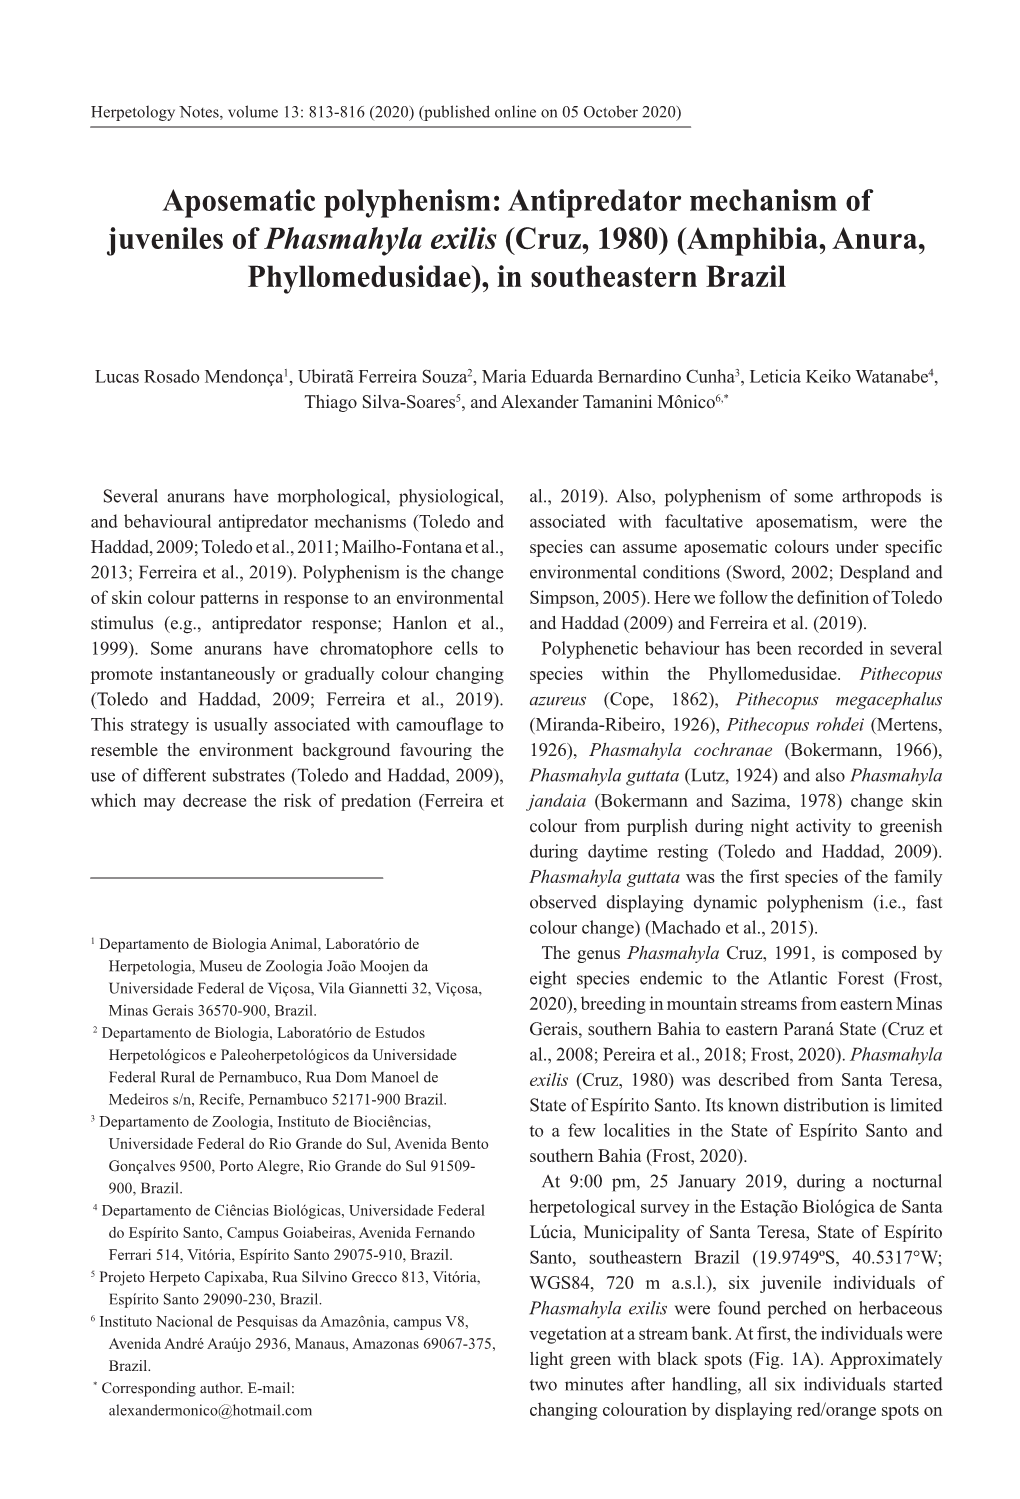 Aposematic Polyphenism: Antipredator Mechanism of Juveniles of Phasmahyla Exilis (Cruz, 1980) (Amphibia, Anura, Phyllomedusidae), in Southeastern Brazil